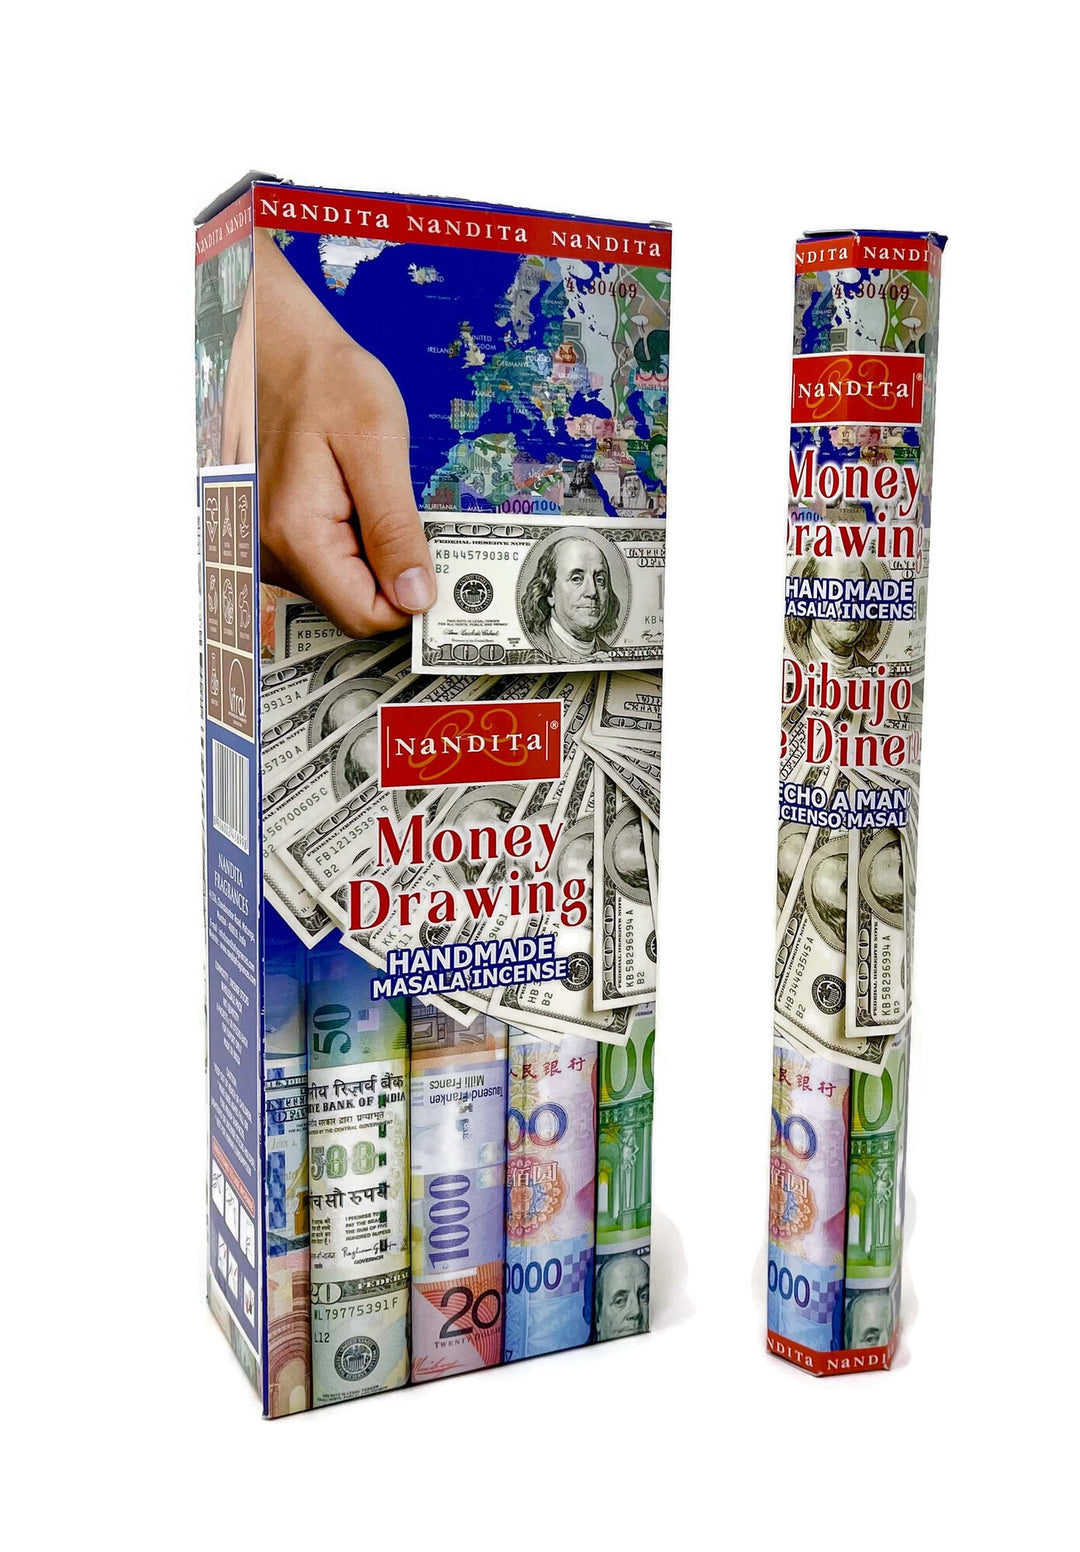 Nandita Masala Incense Sticks - Money Drawing - 6 HEXA Tubes - Total 120 Sticks